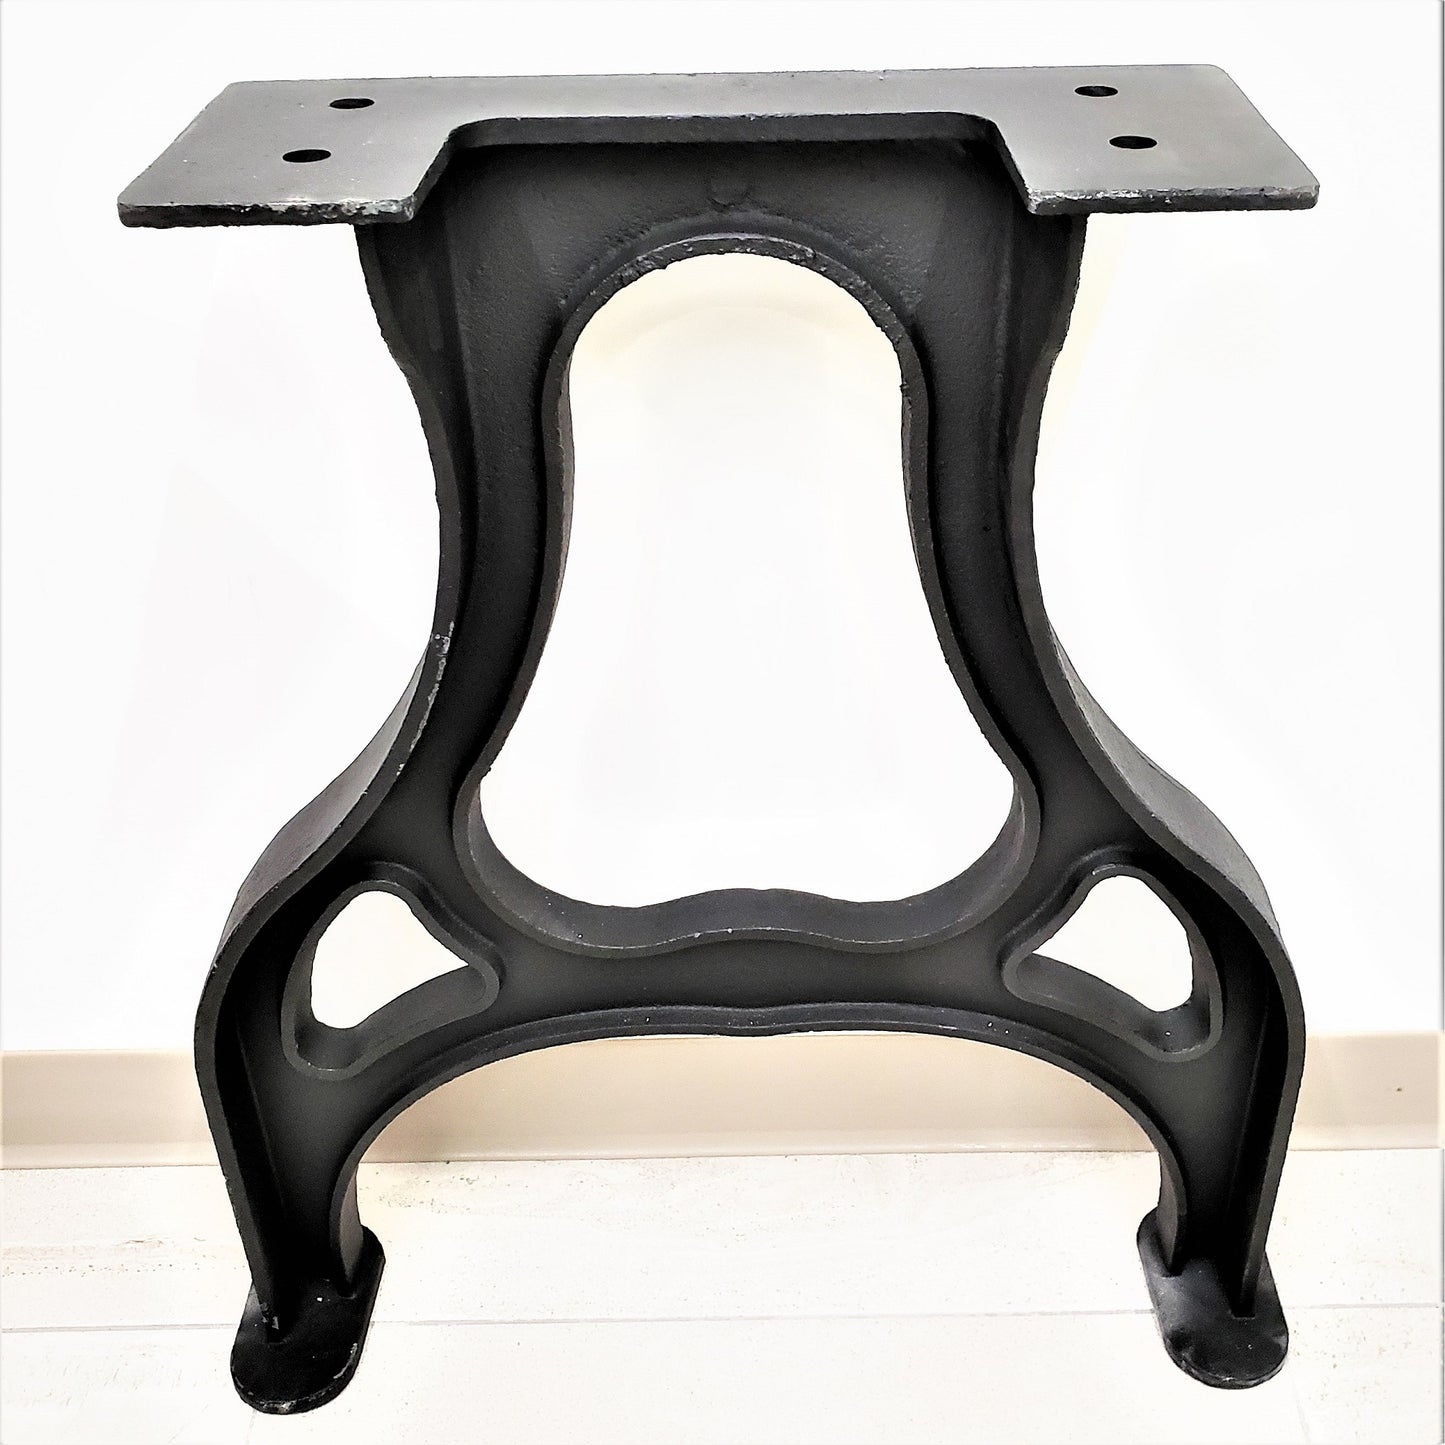 Cast Iron Table Base, Furniture Legs, Metal Legs, Steel Legs, Coffee Table Legs, Hairpin Legs, Dining Table Legs